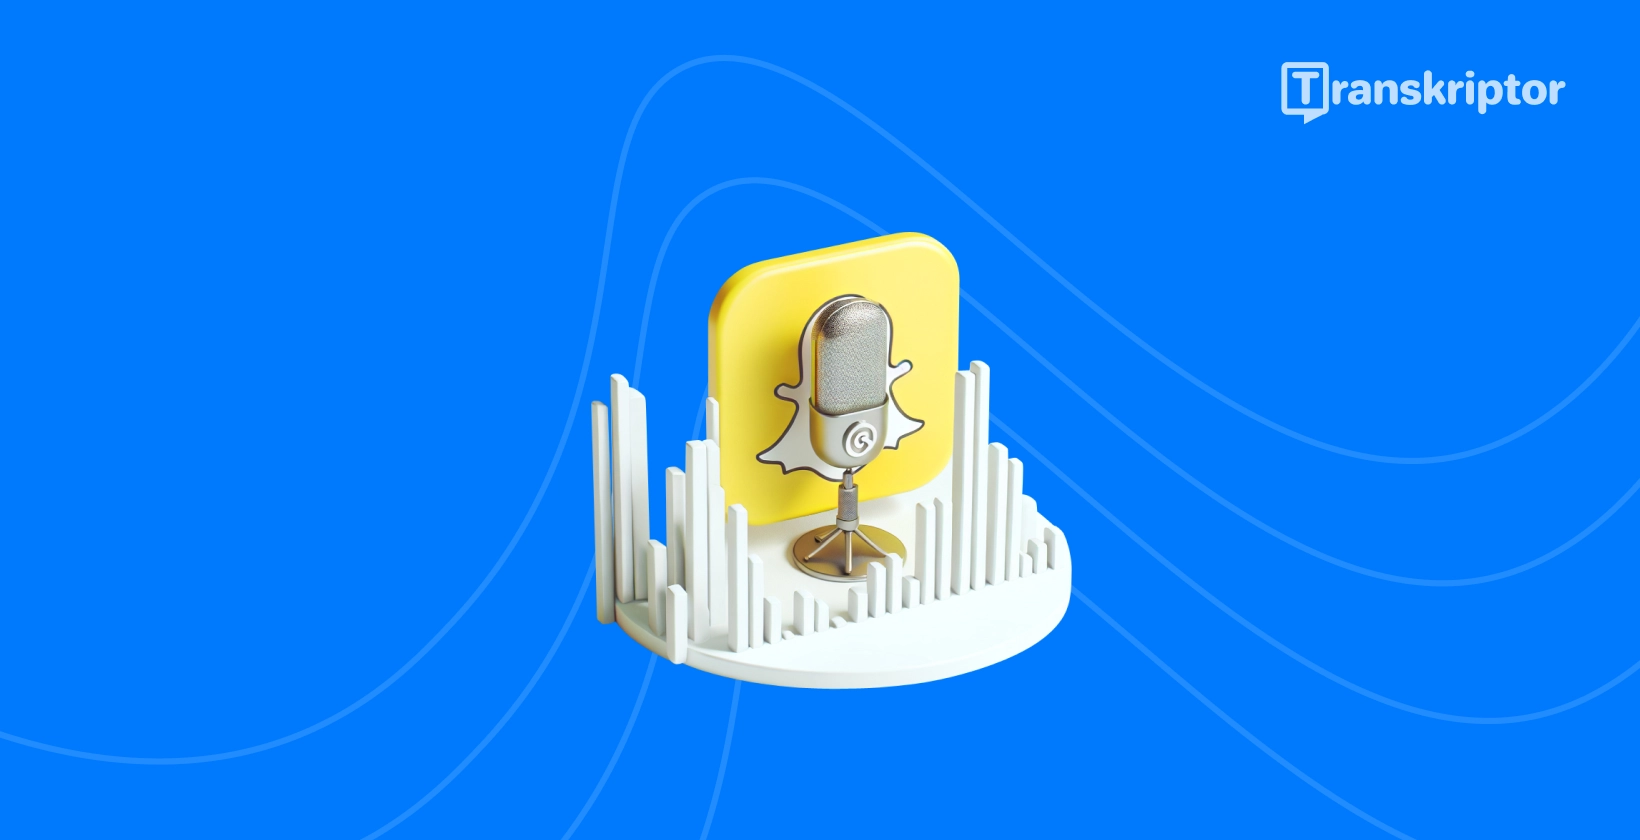 Snapchat 幽灵和麦克风图标象征着 Transkriptor 的音频转录指南。